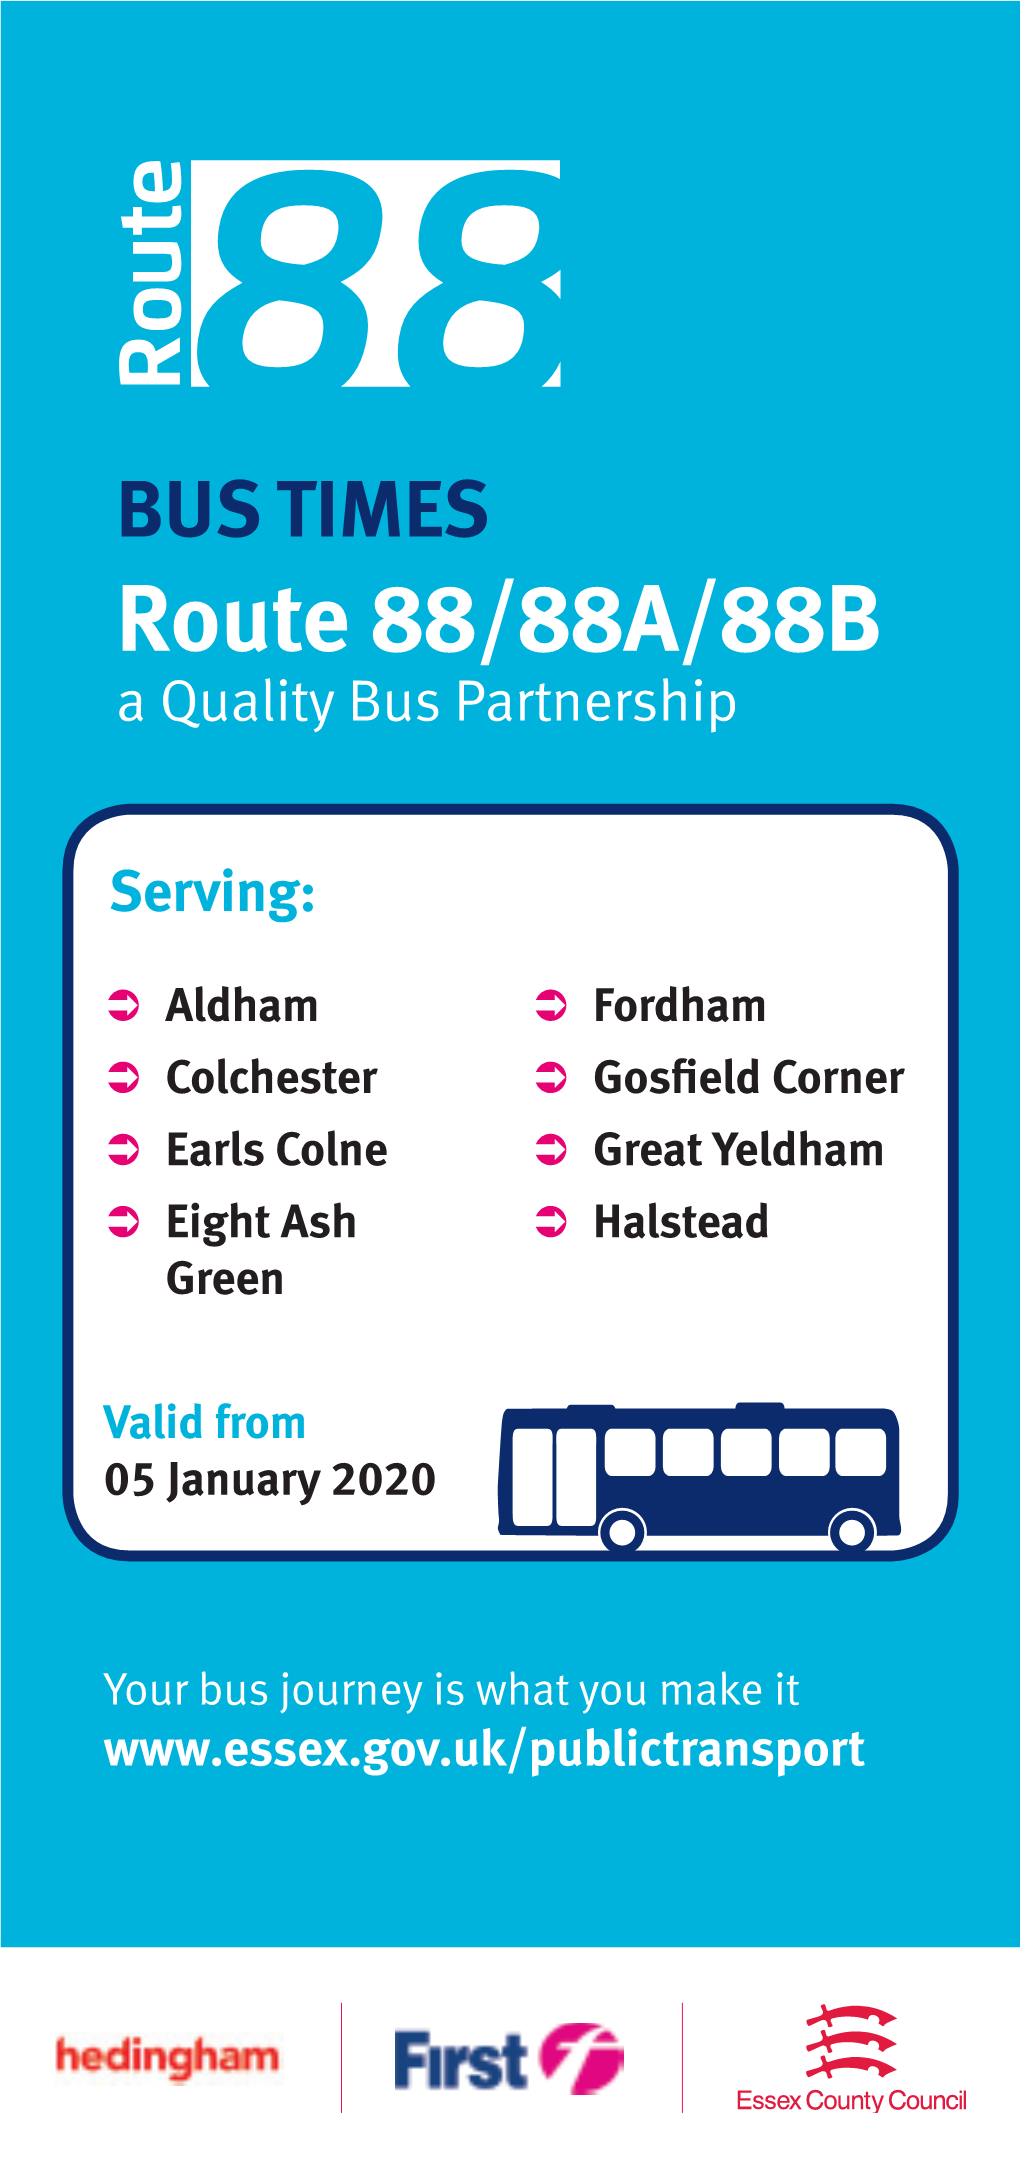 Route 88/88A/88B a Quality Bus Partnership